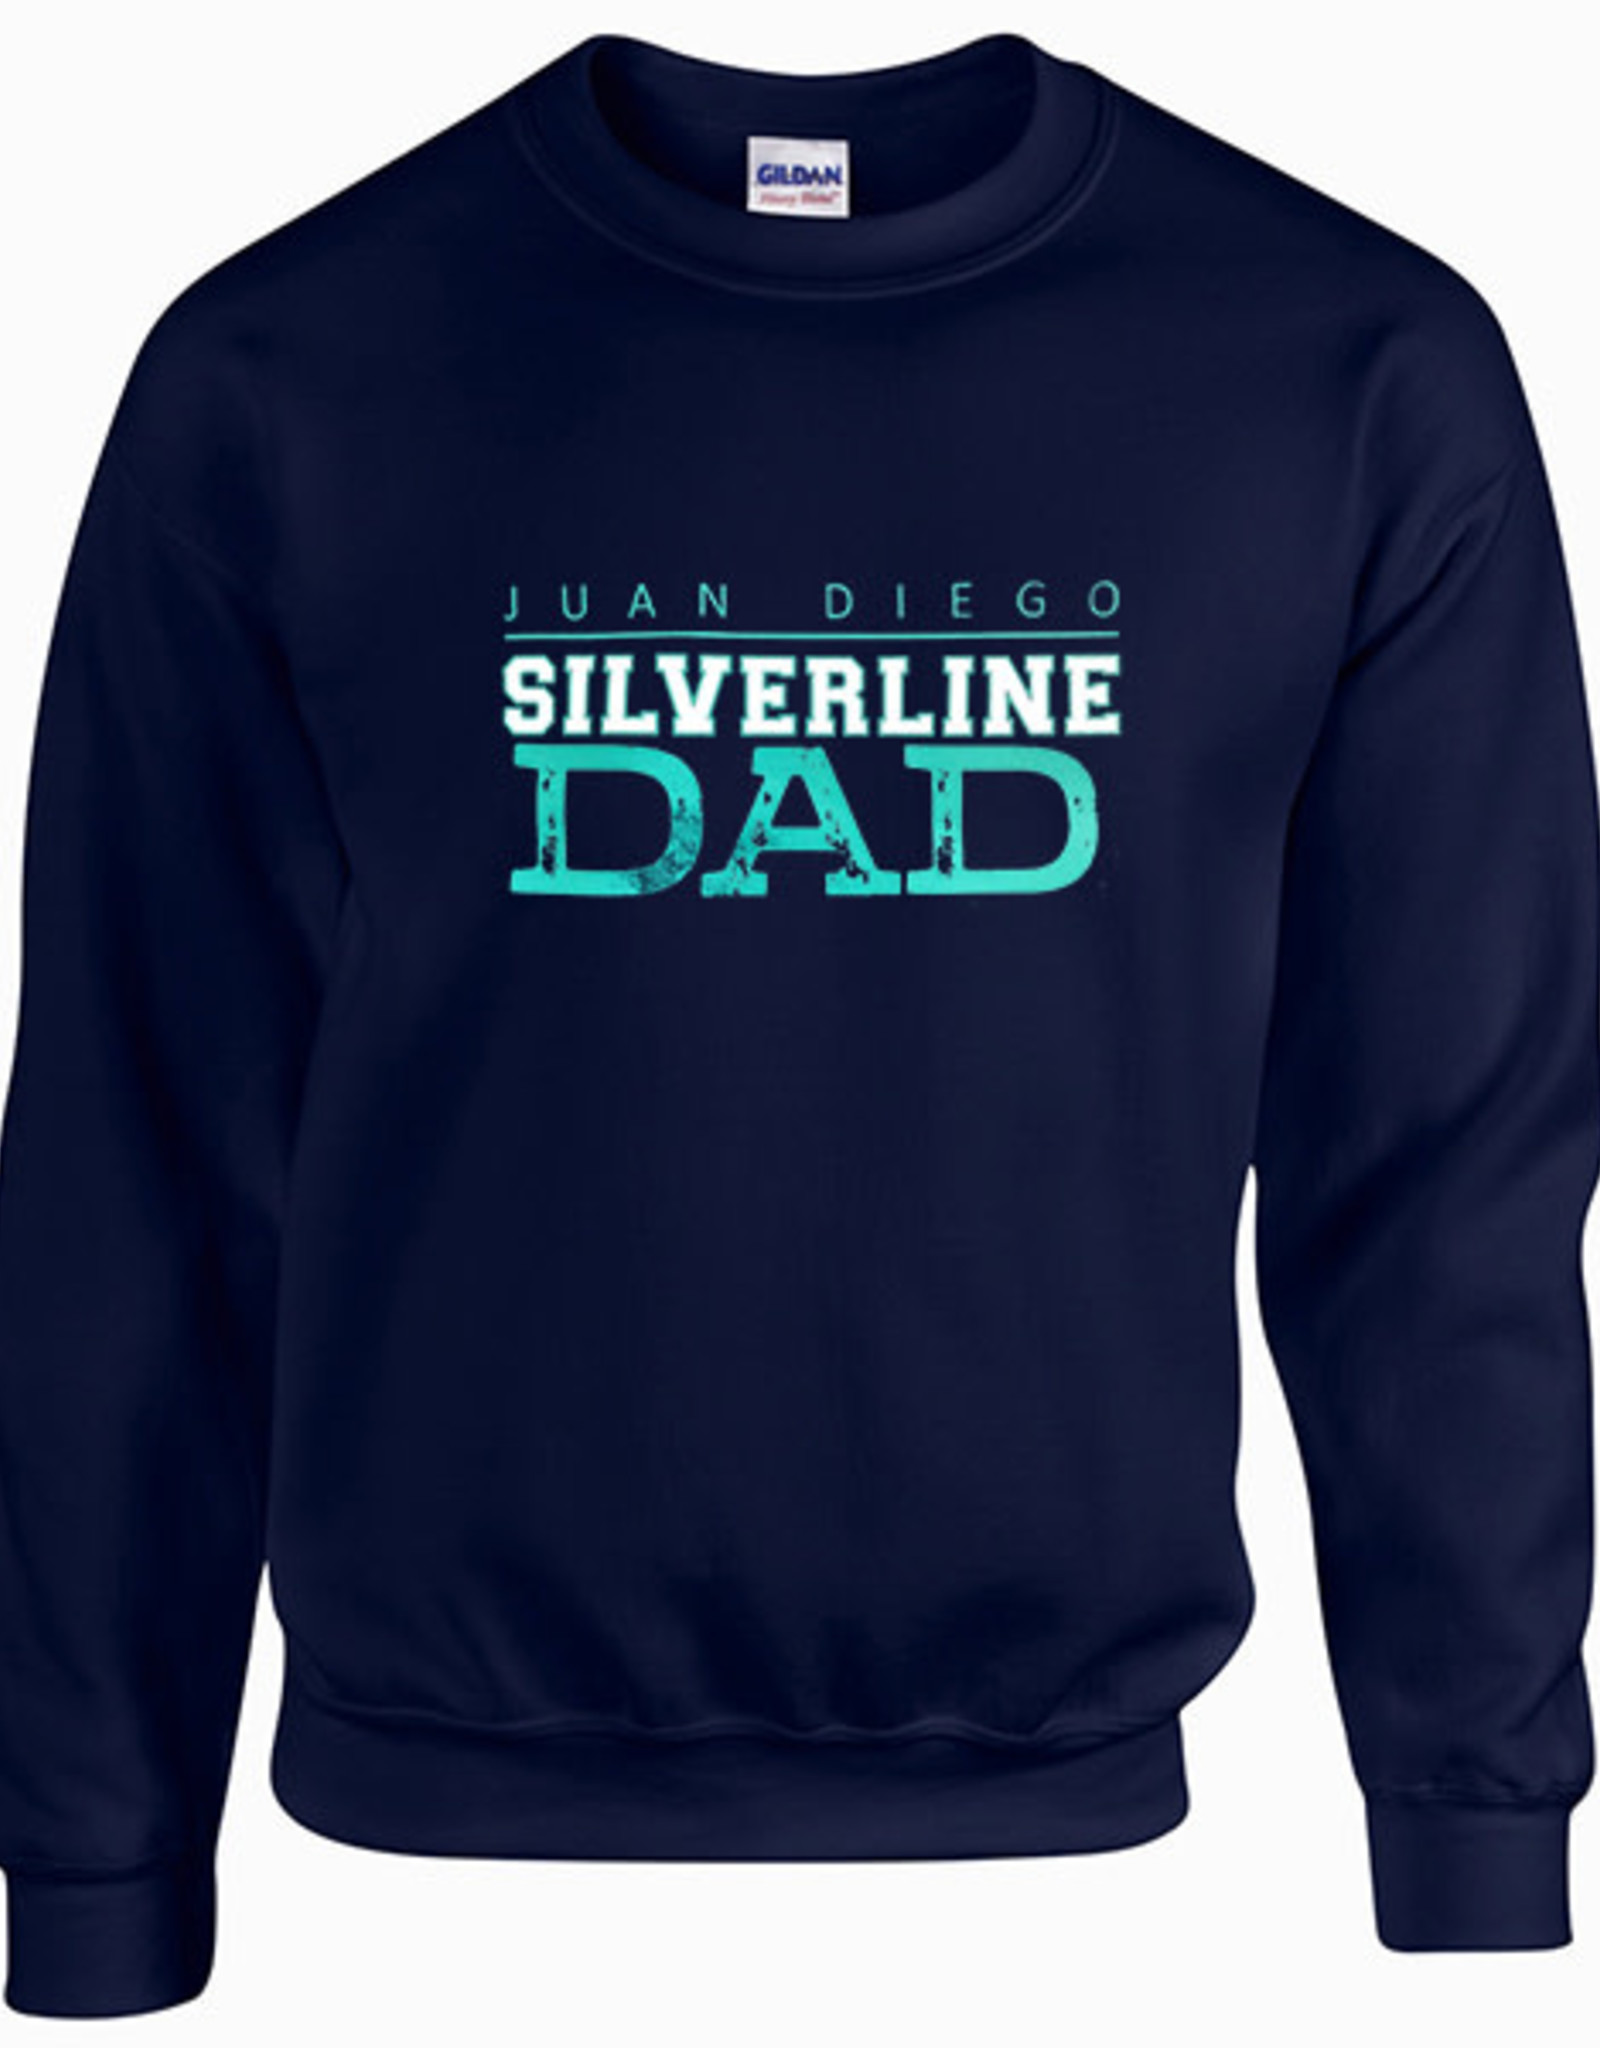 NON-UNIFORM SilverLine DAD Shirt, custom options